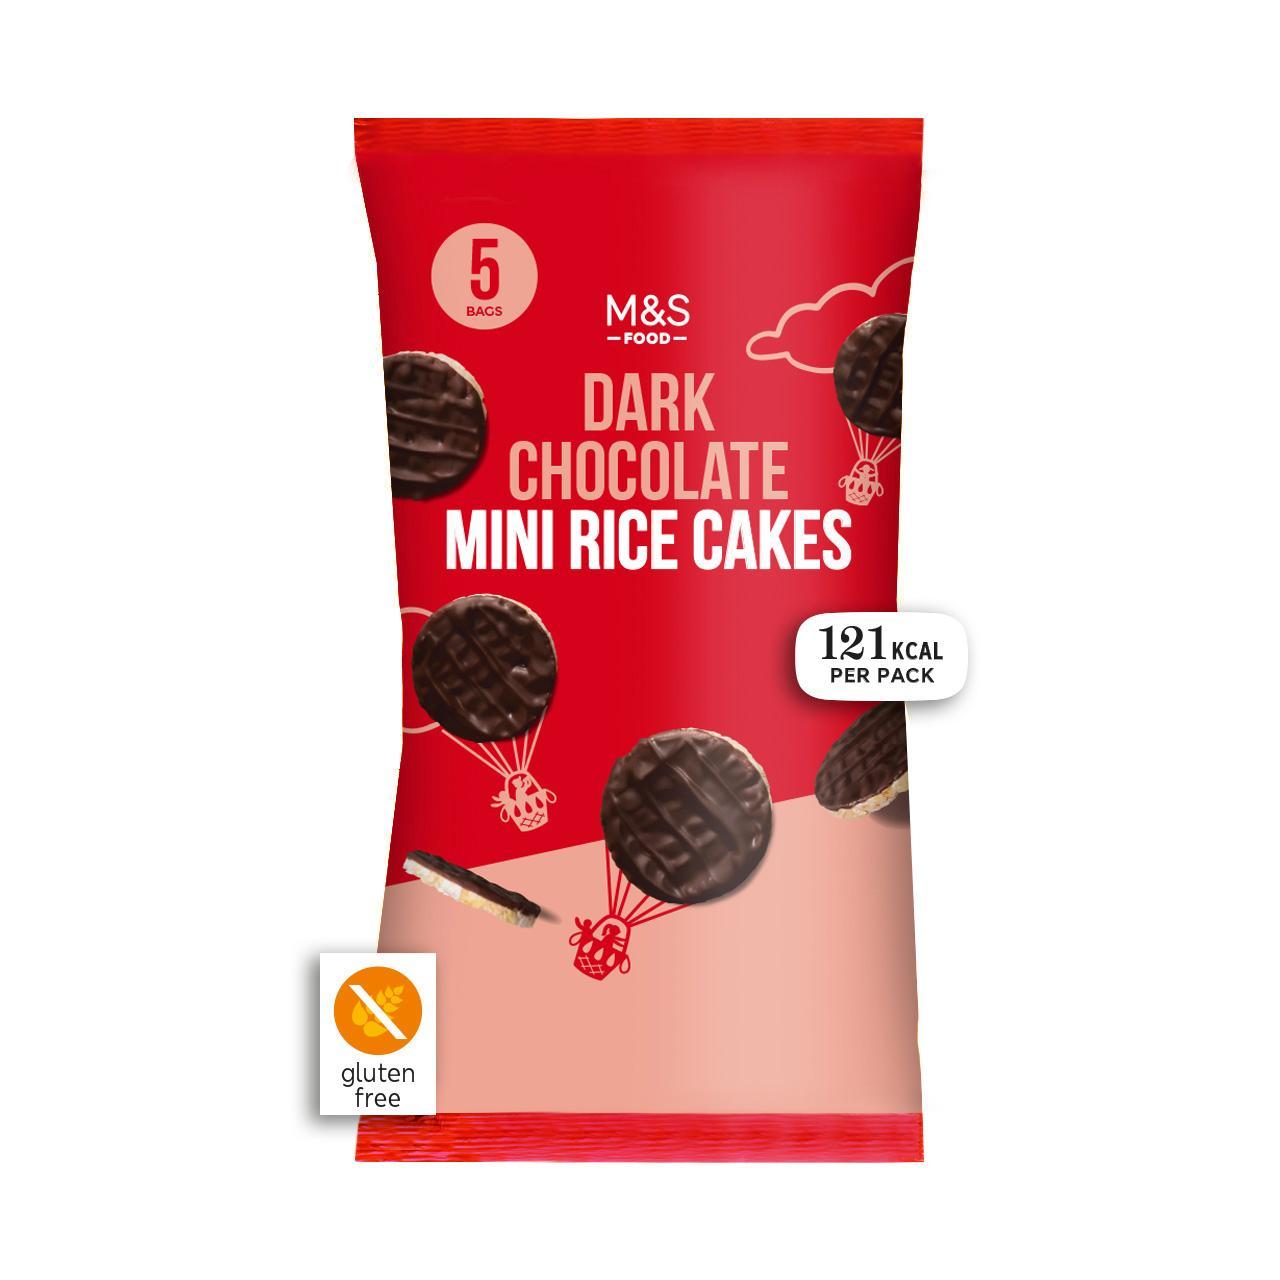 M&S Dark Chocolate Mini Rice Cakes